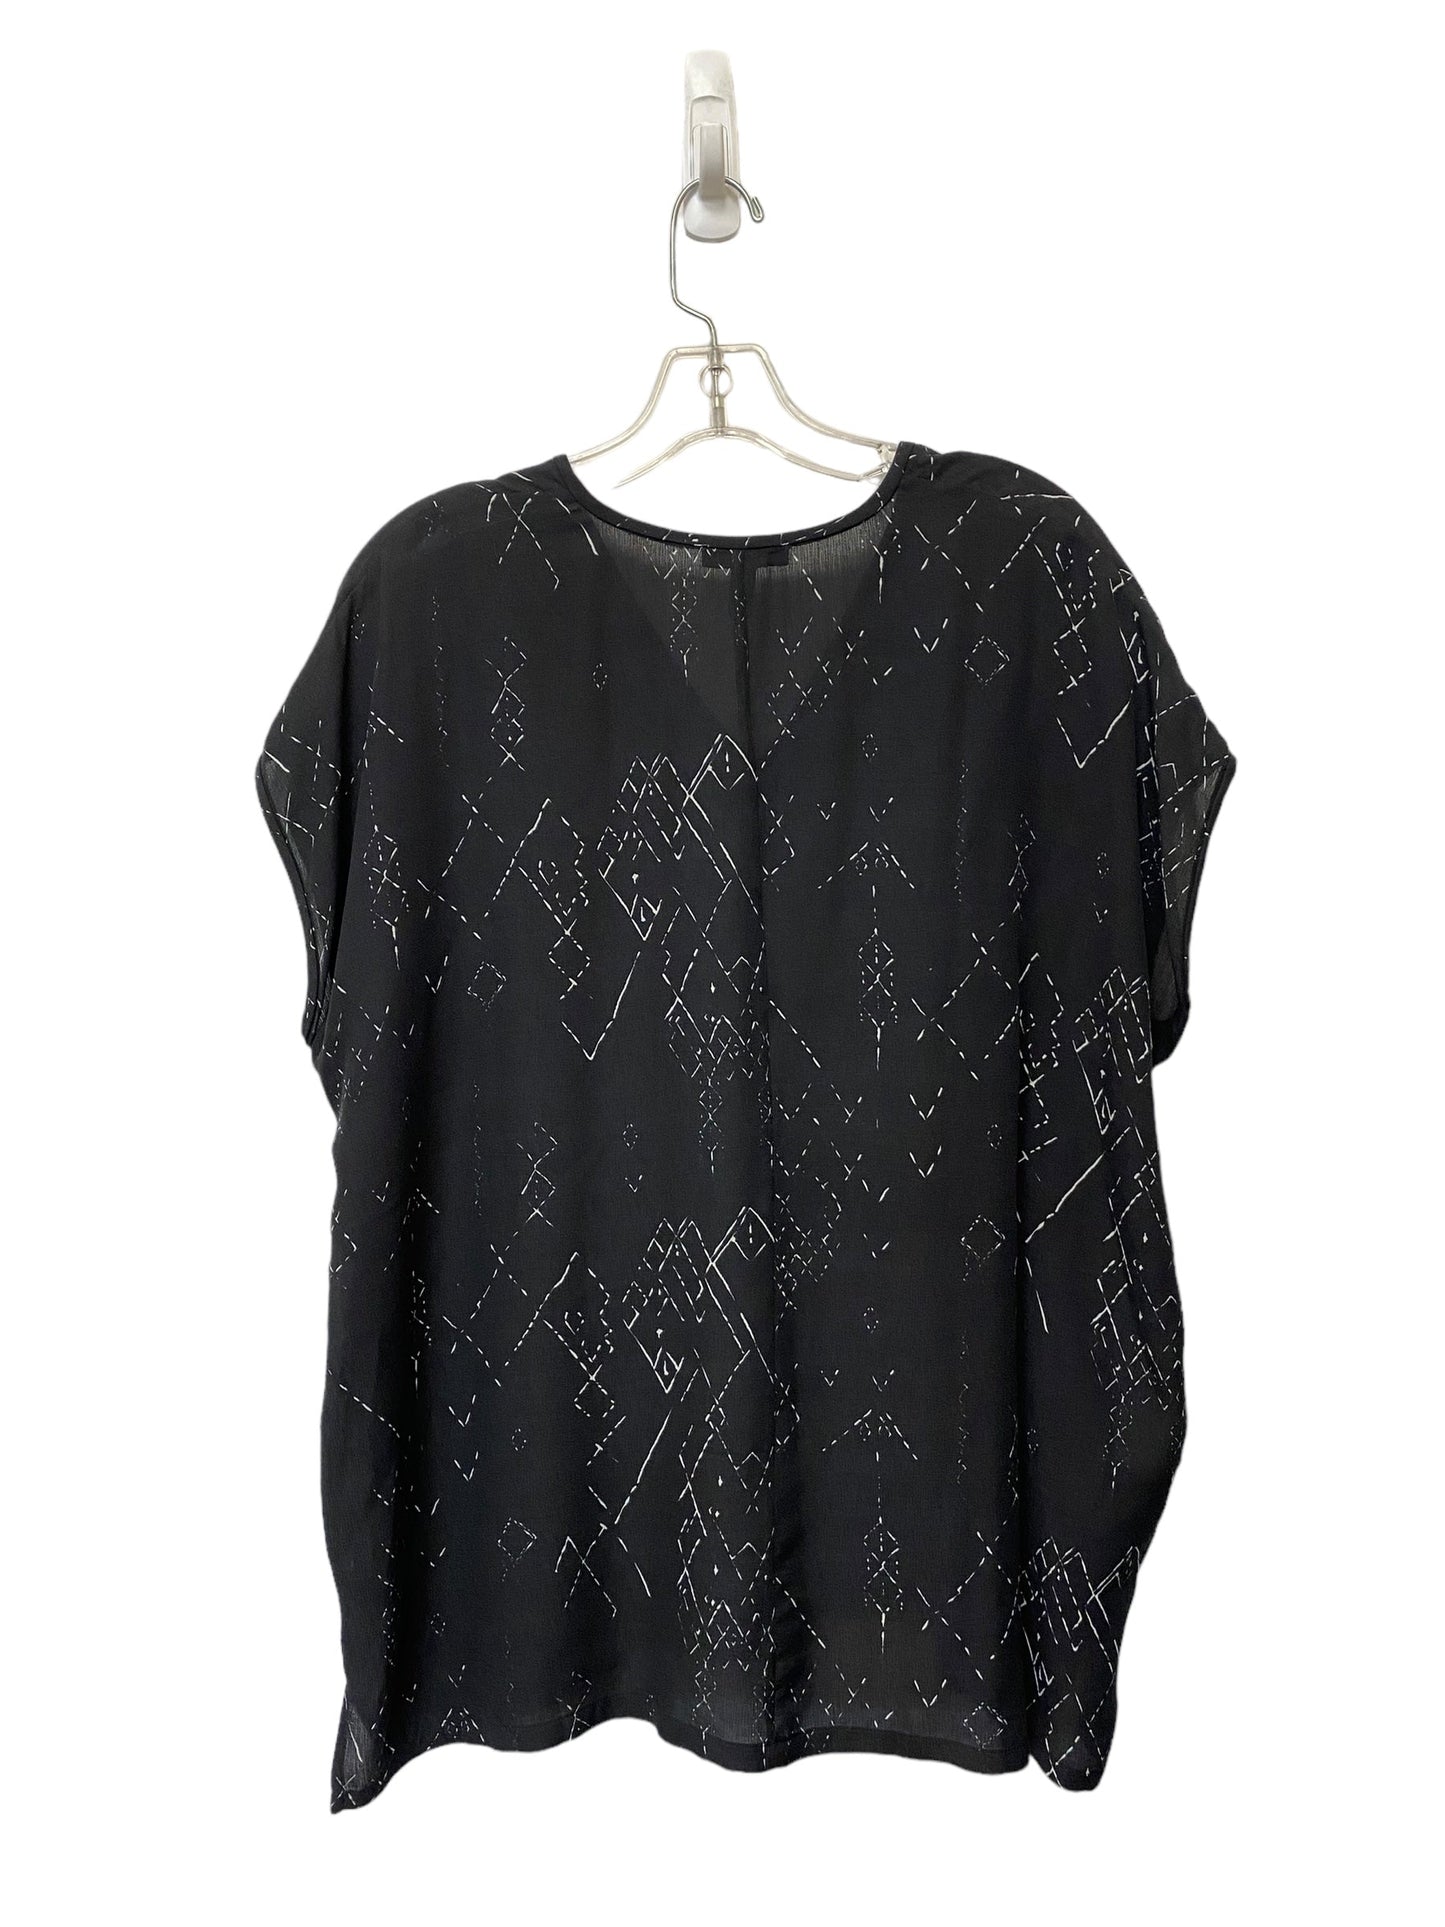 Black Top Short Sleeve Eileen Fisher, Size M